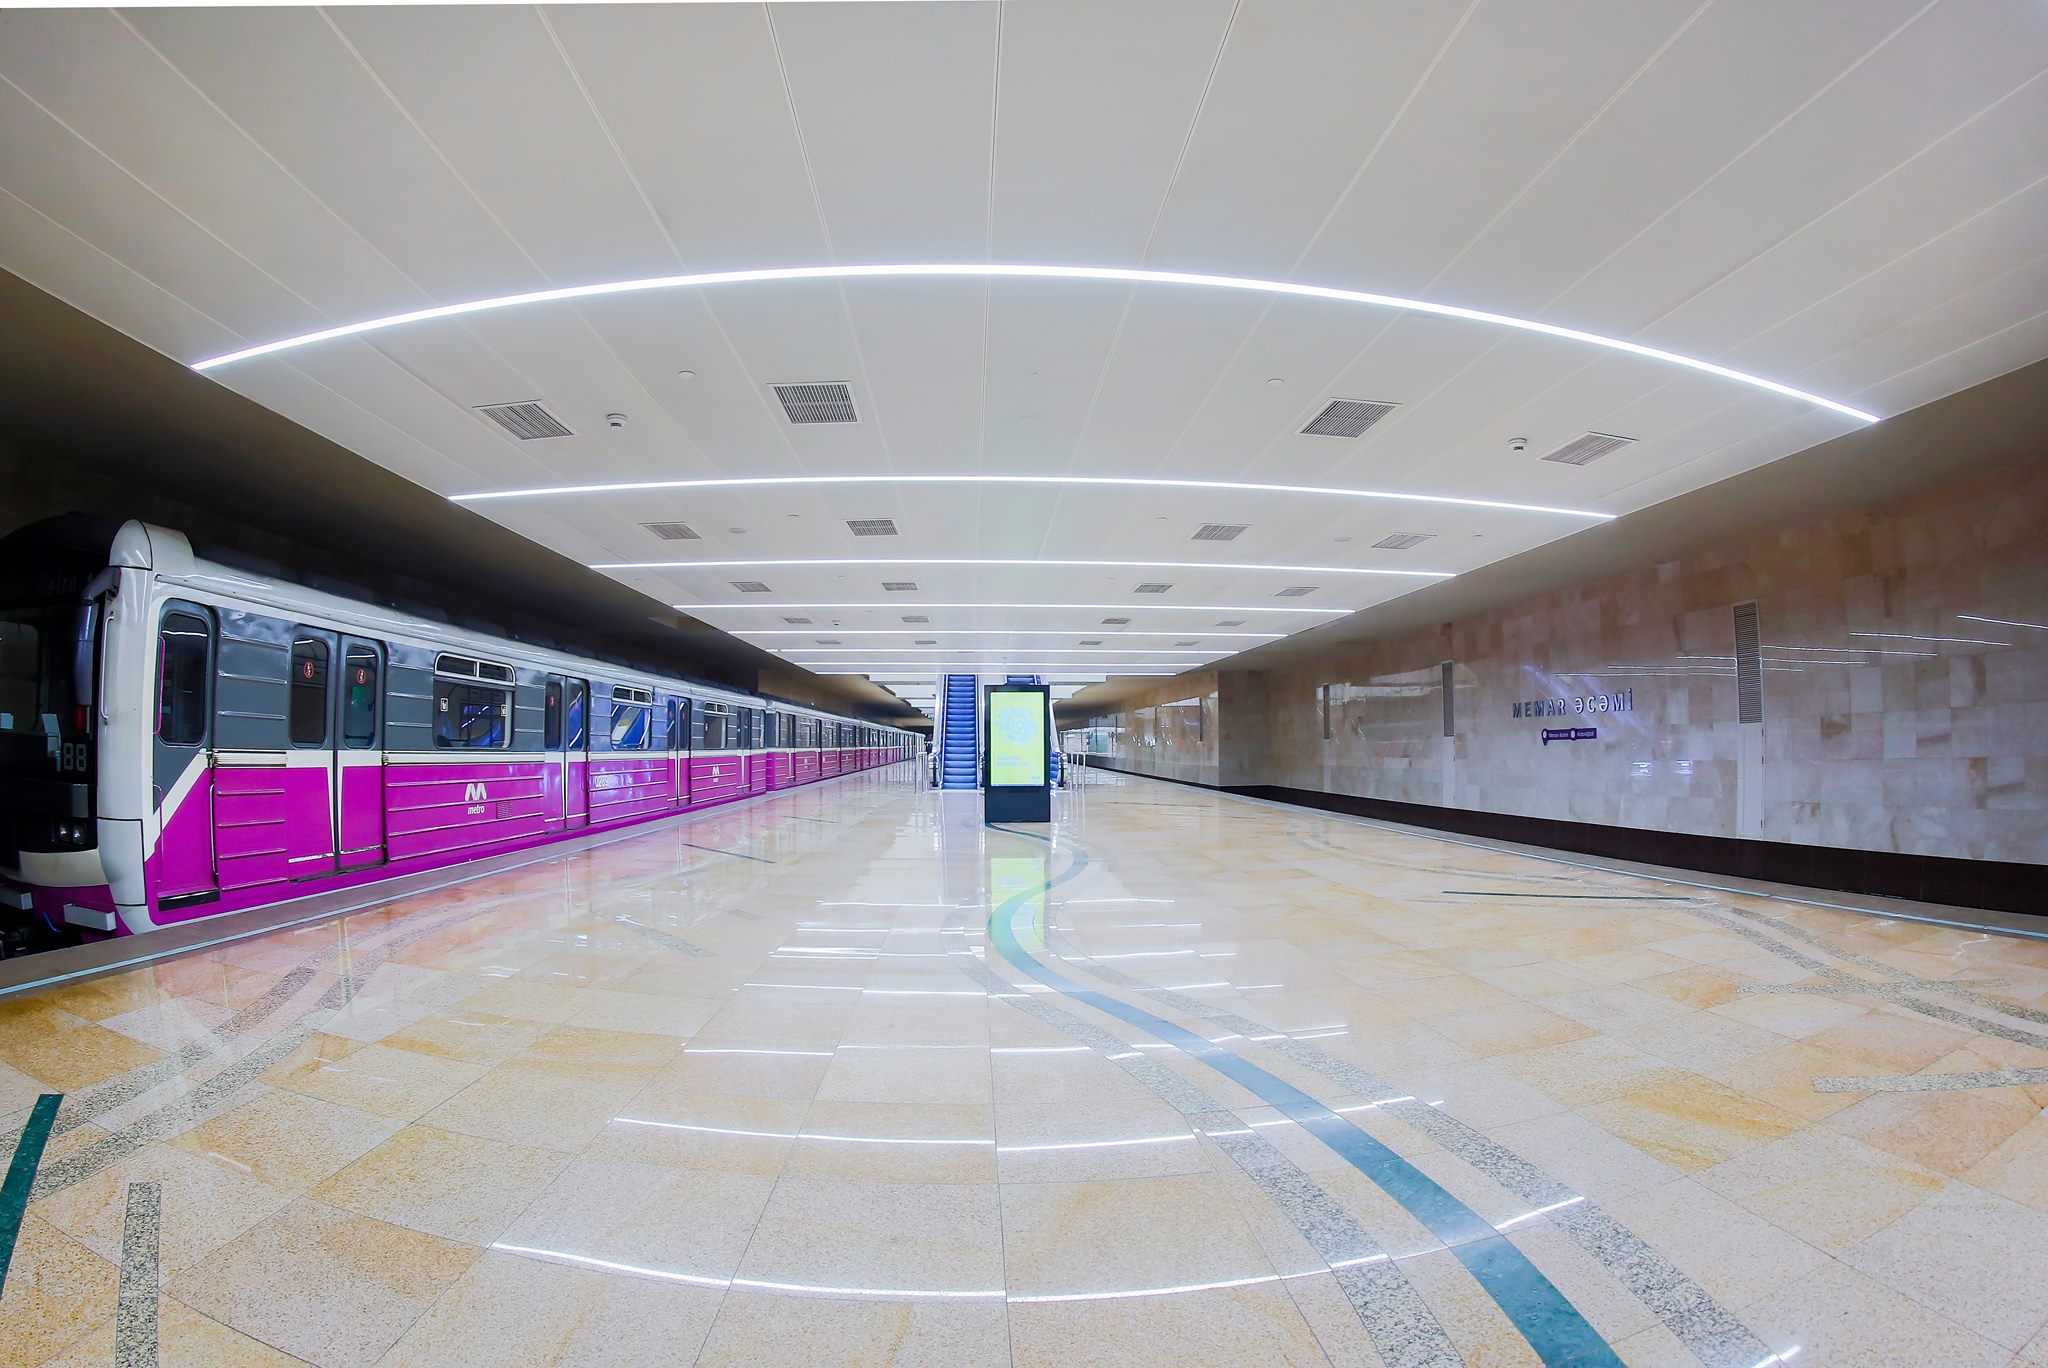 Bakı metrosunda daha bir problem - Qatarlar gecikir...